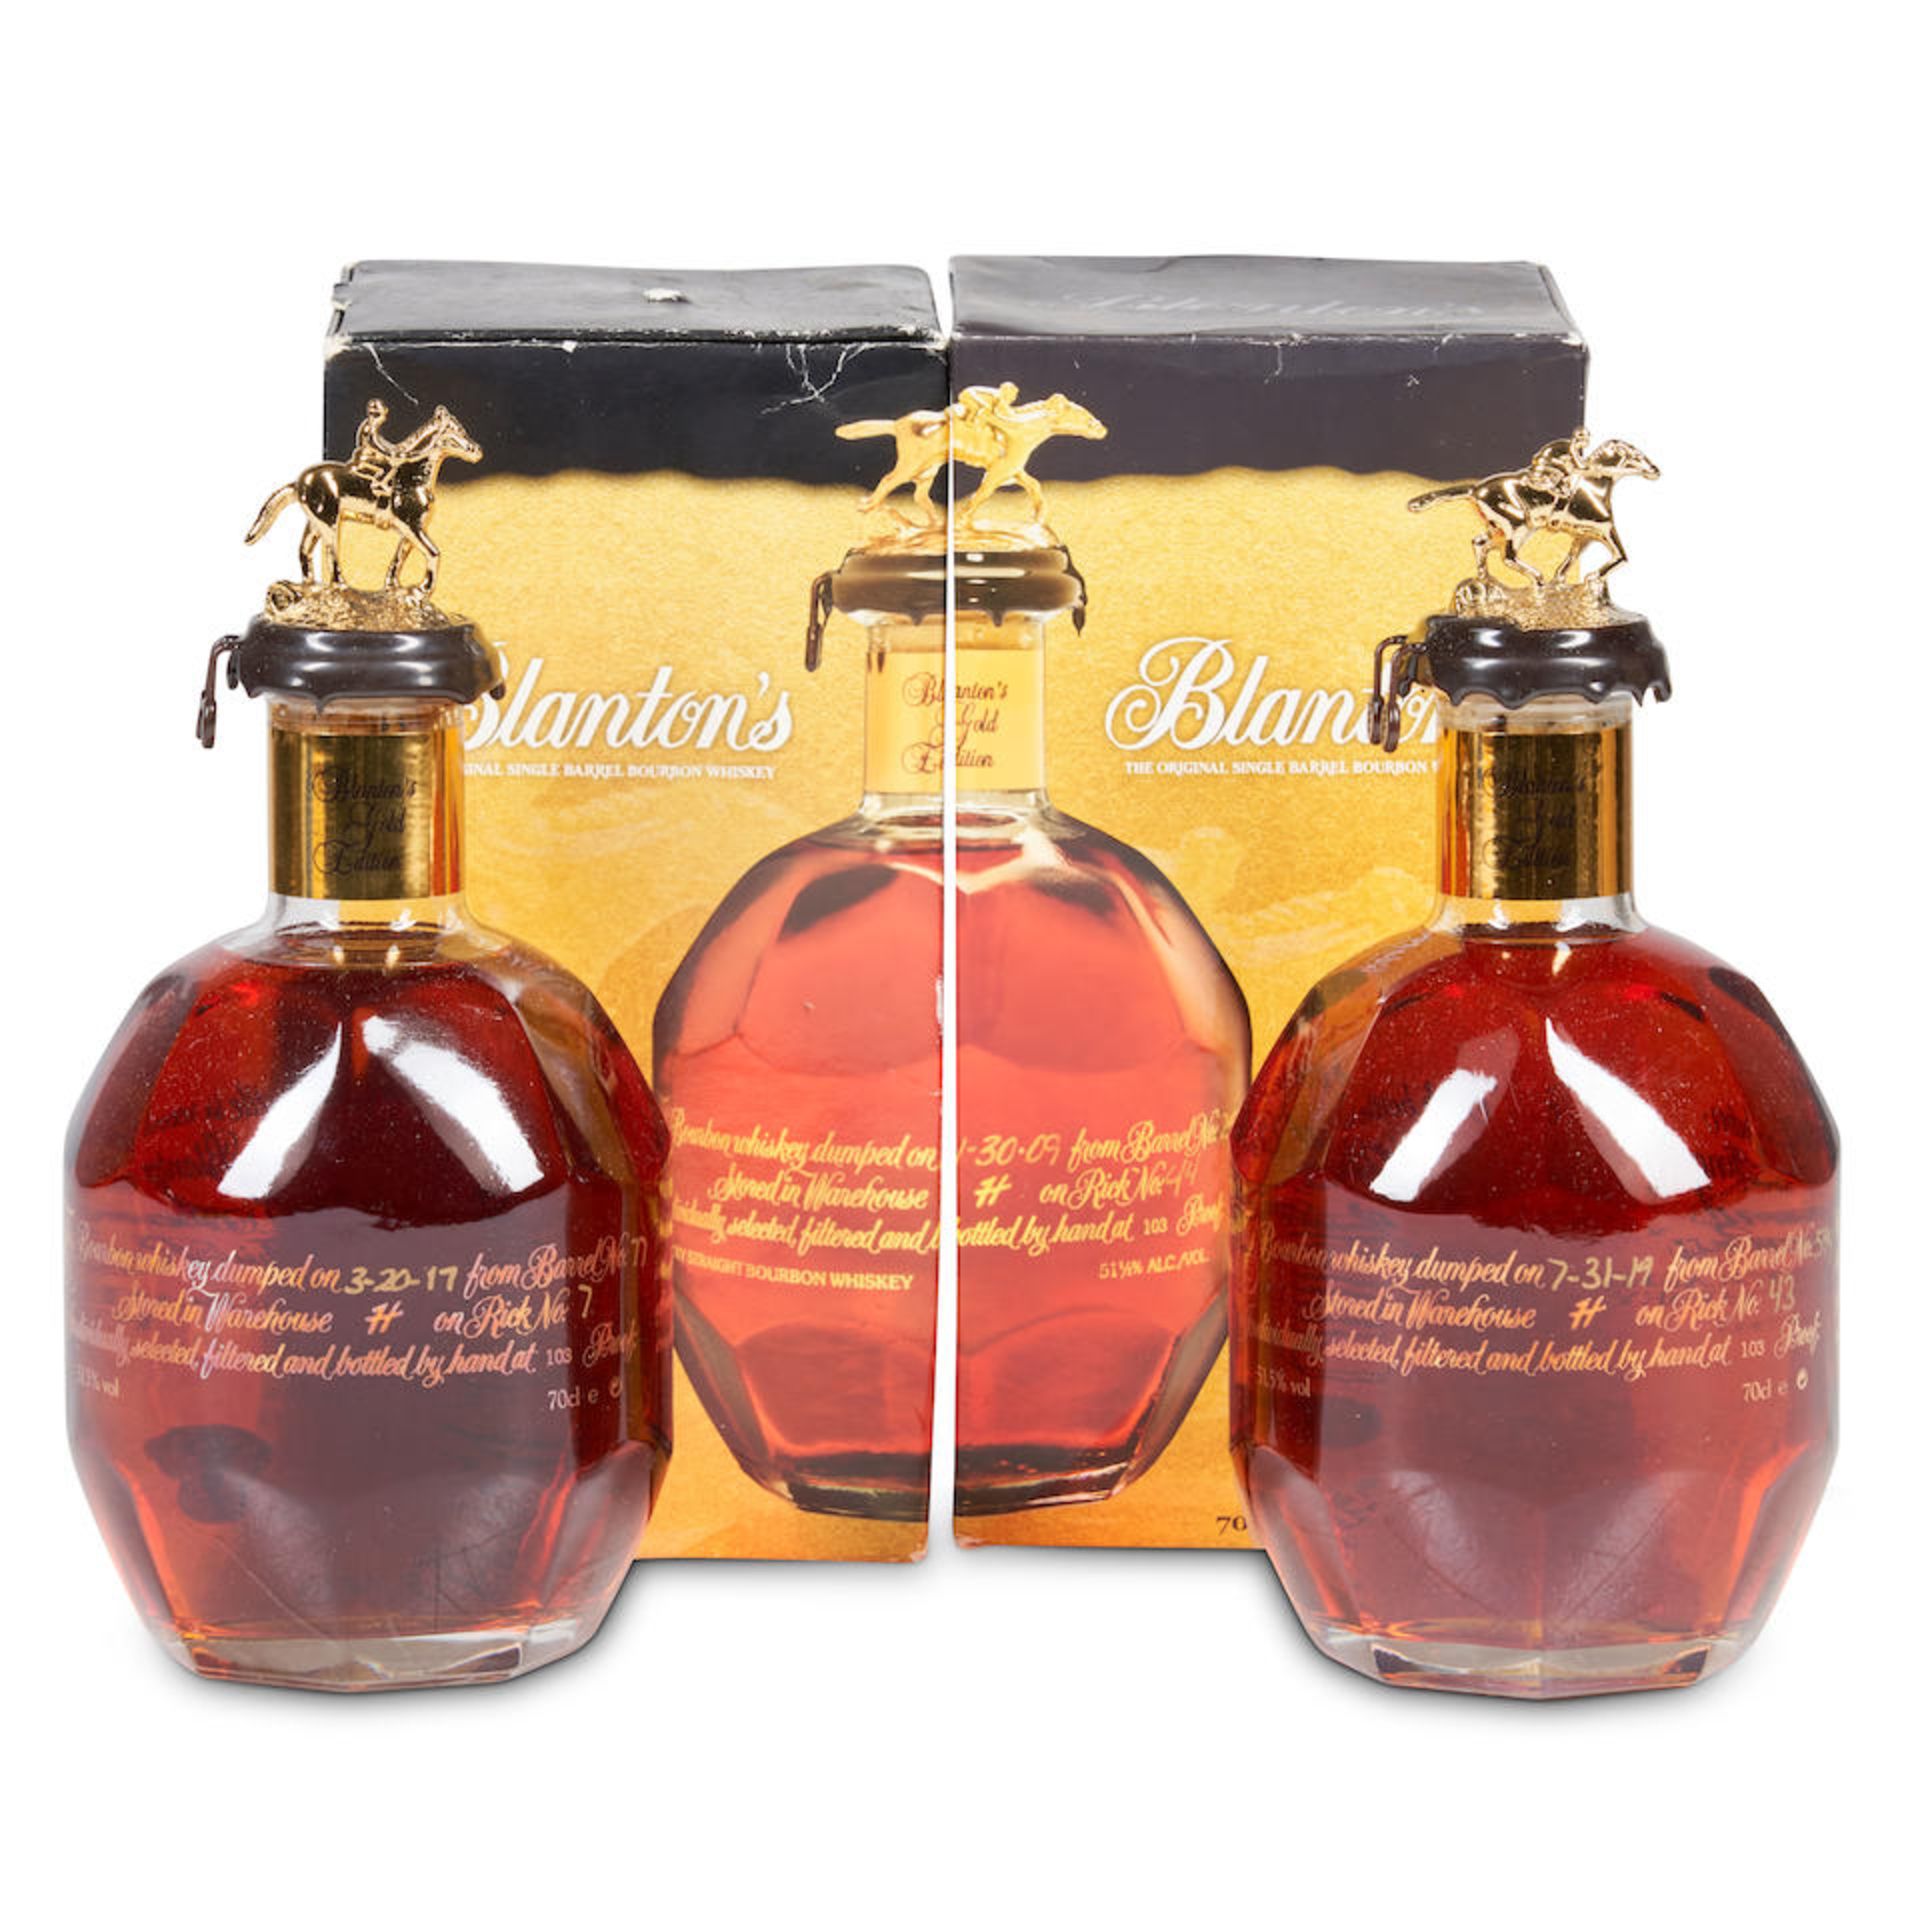 Blanton's Gold Edition (2 750ml bottles)